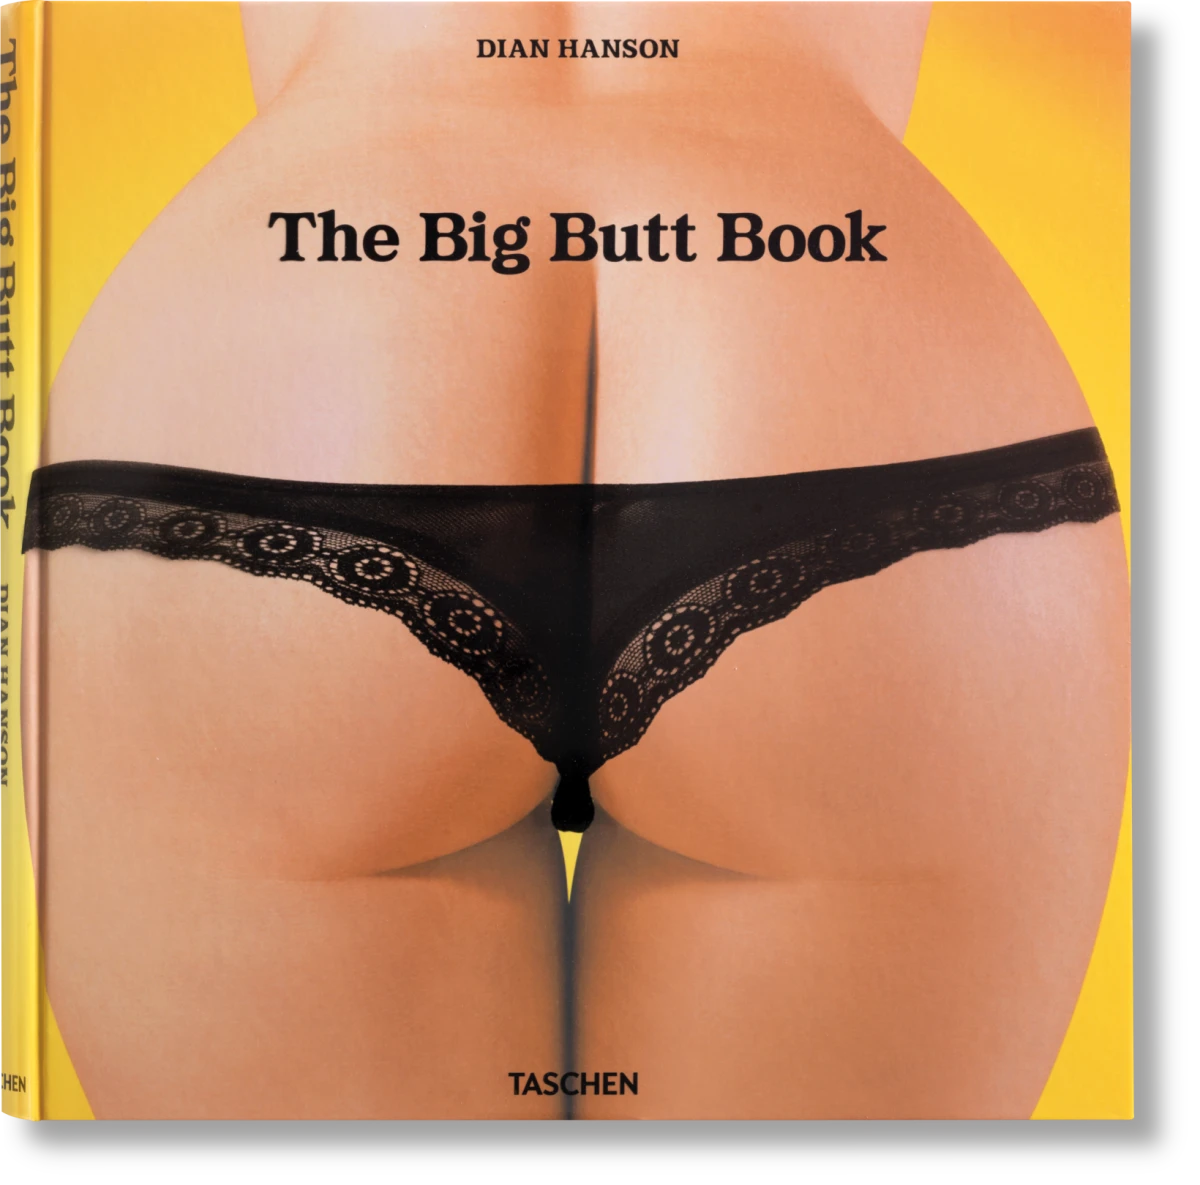 chris vitello recommends The Big Book Of Porn